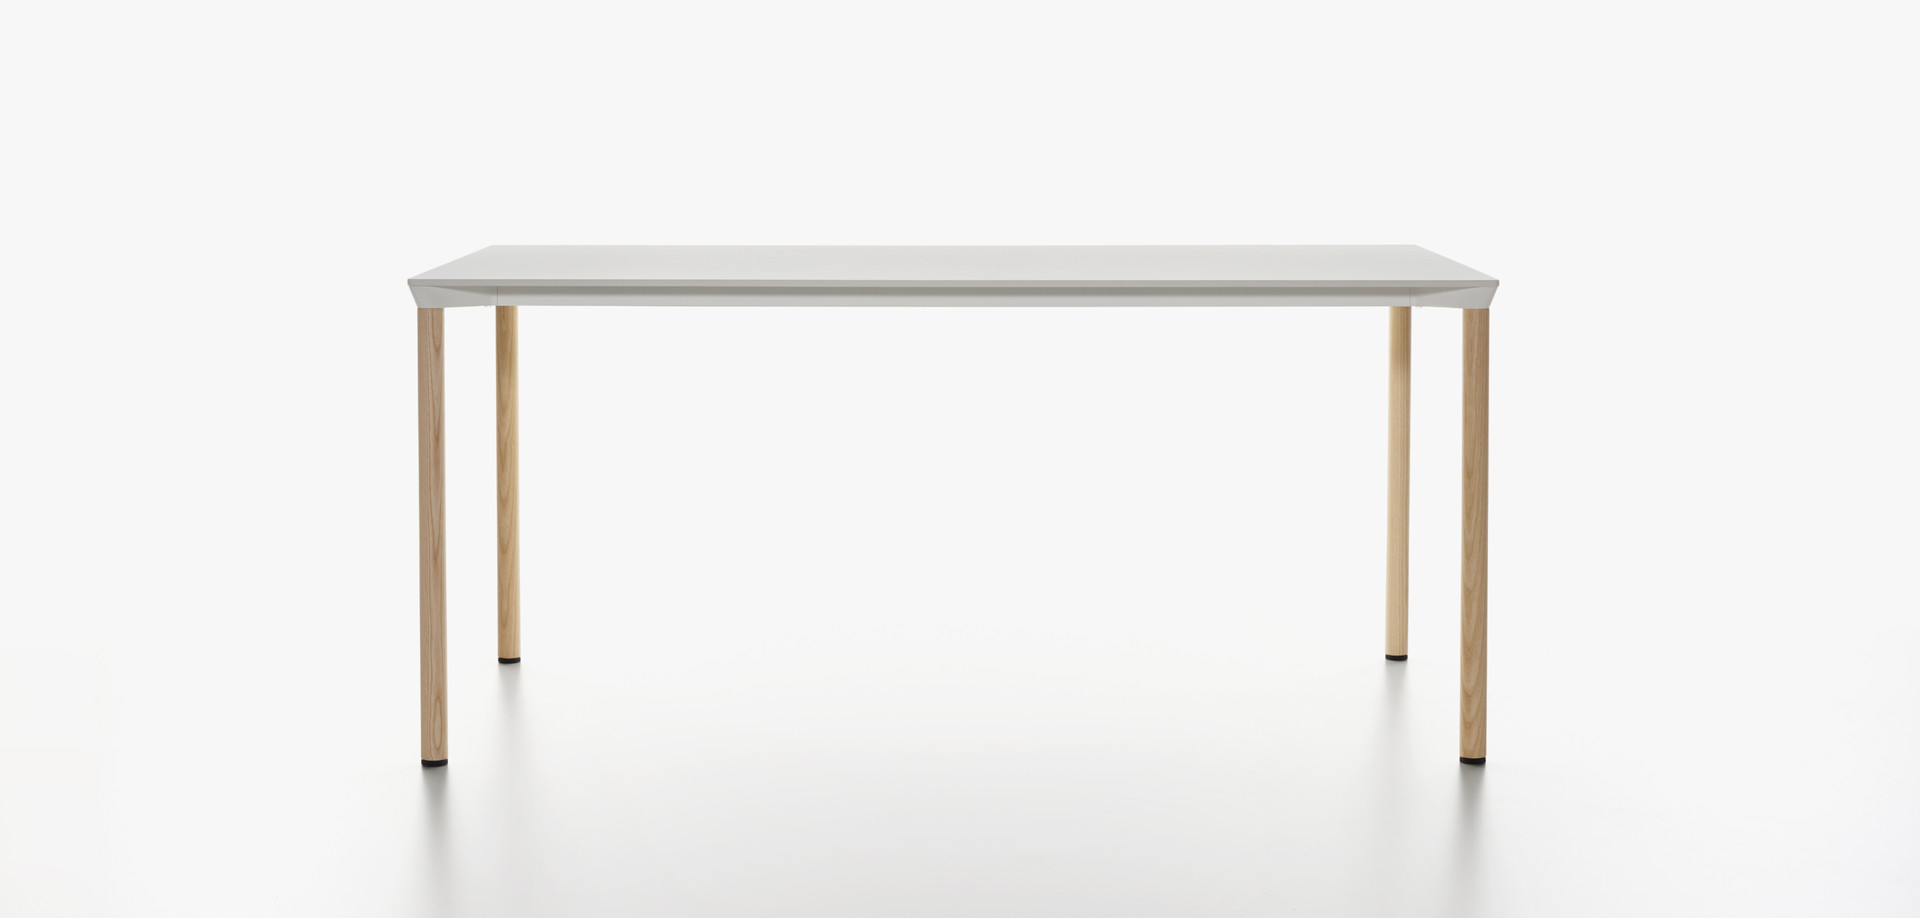 Plank - MONZA table rectangular, white HPL table top, natural ash legs